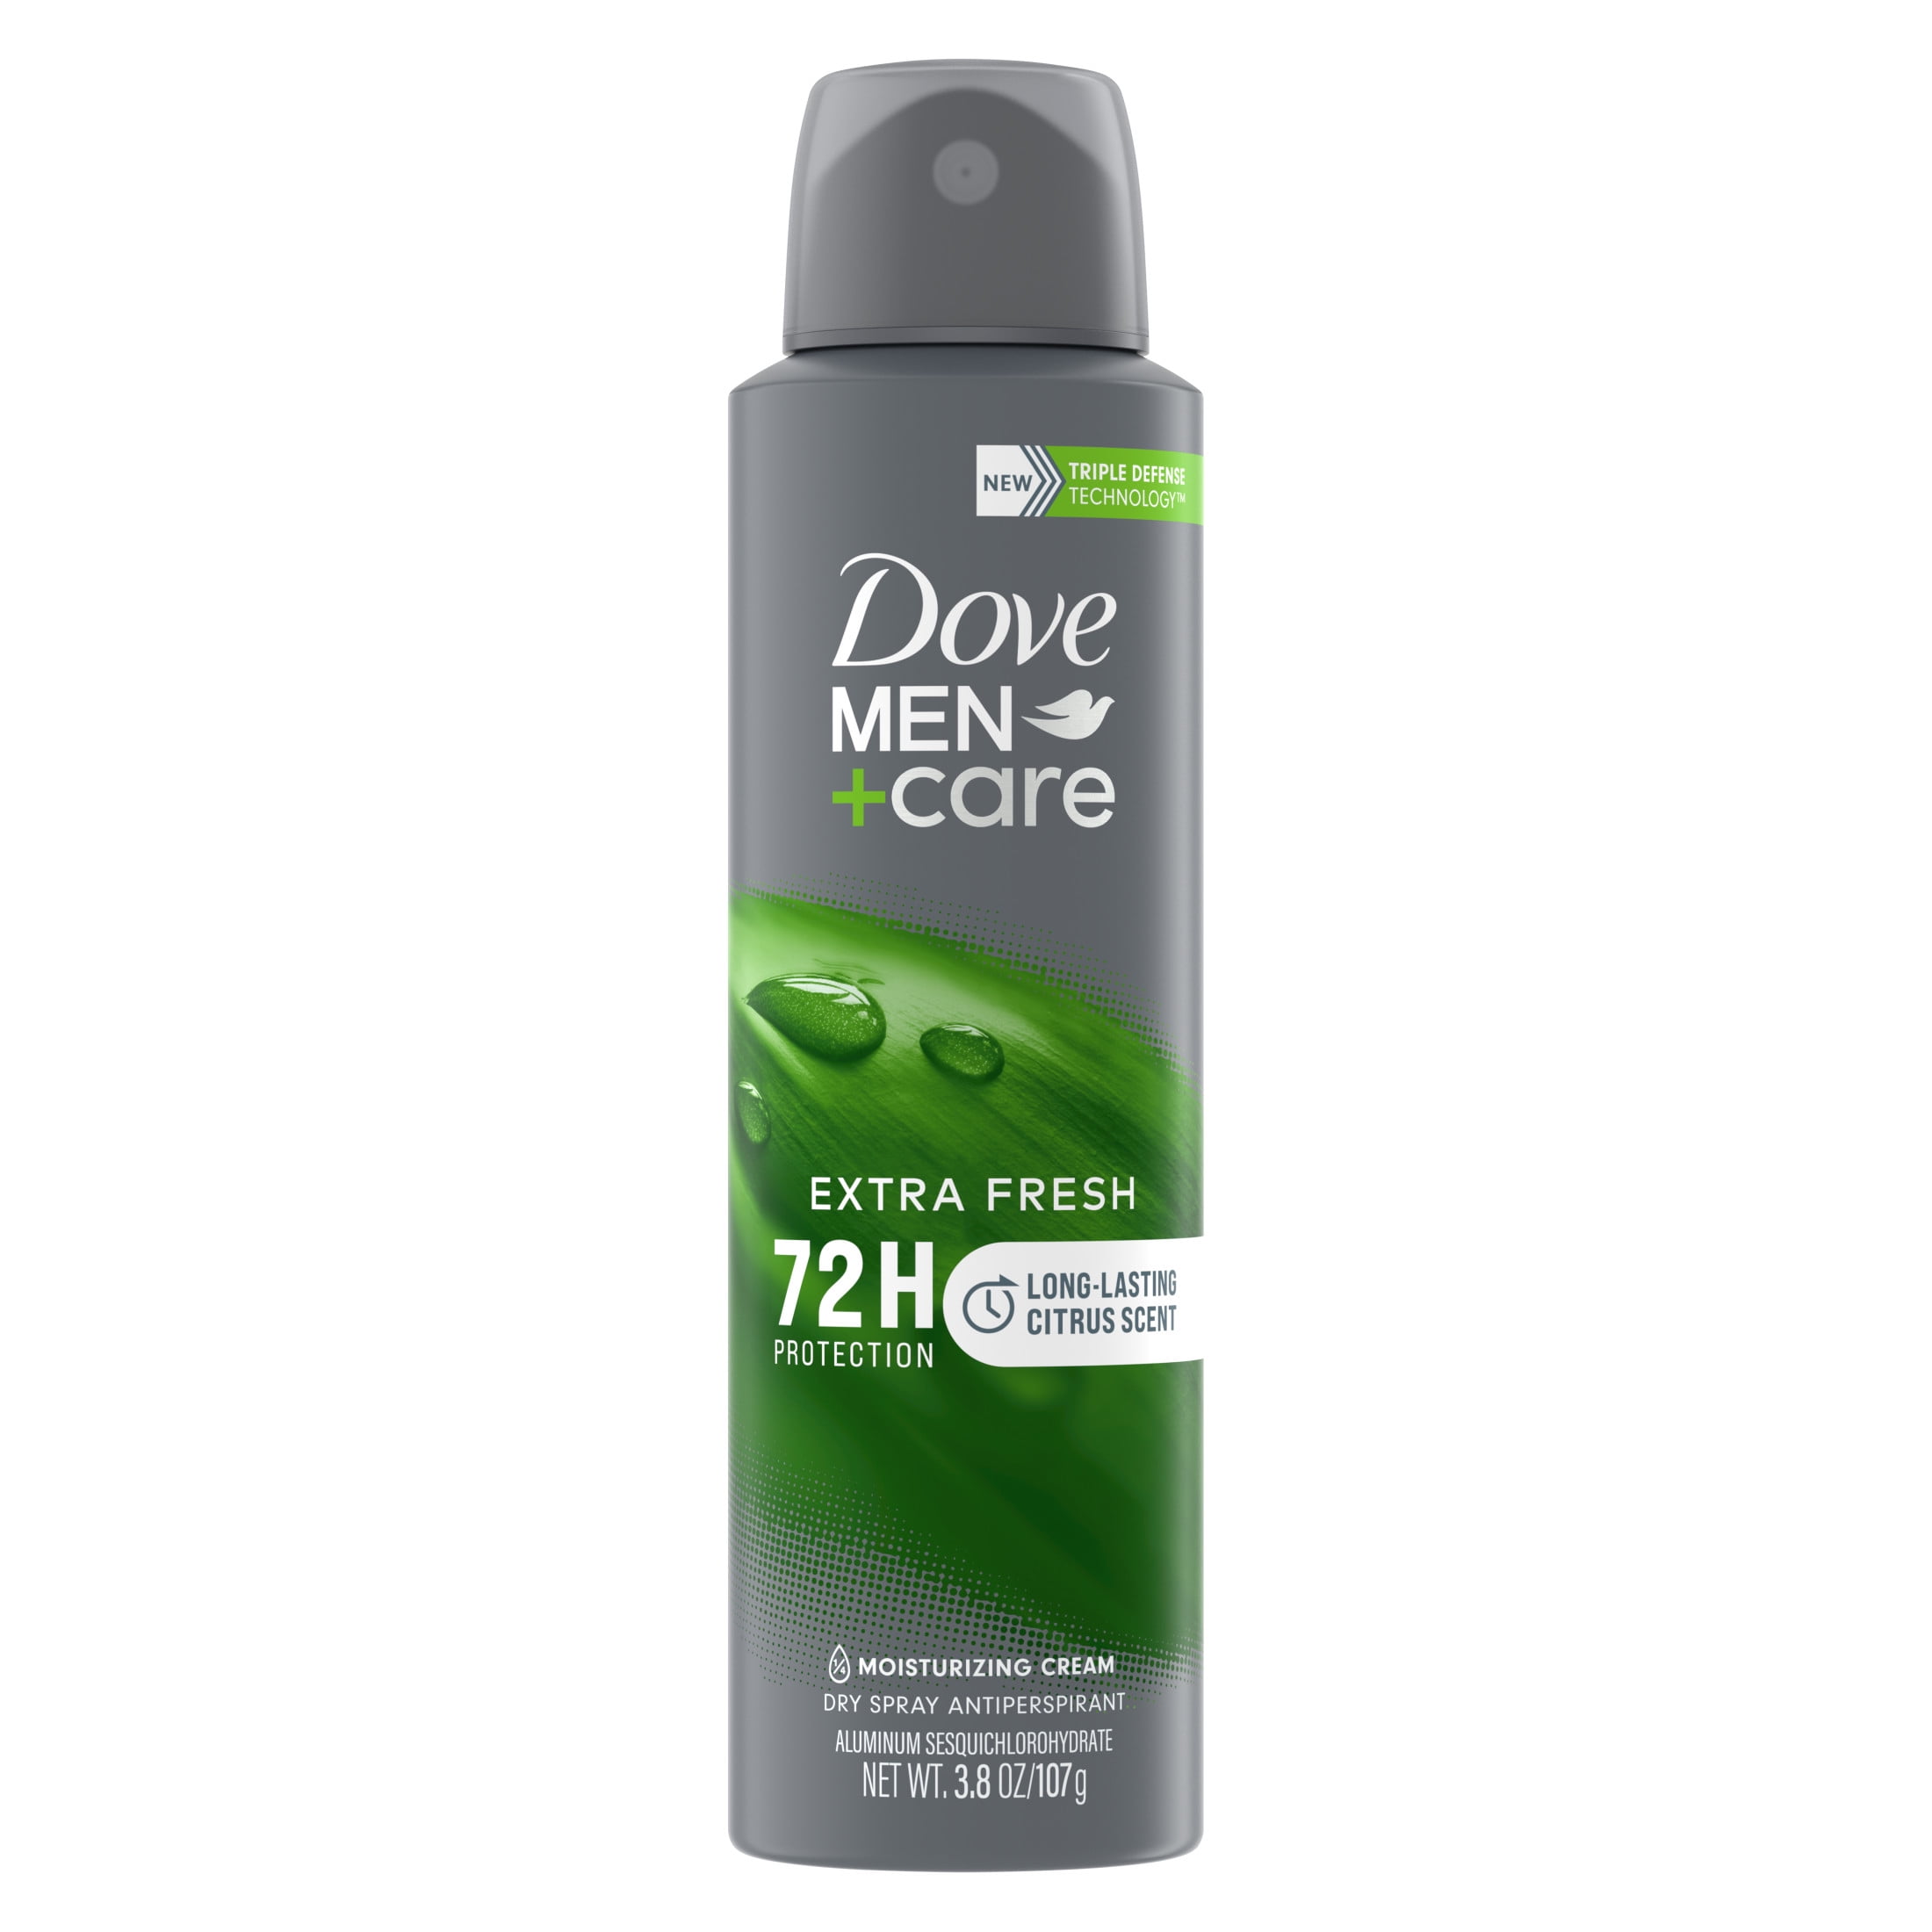 Mammoet staal vier keer Dove Men+Care Extra Fresh 72H Dry Spray Antiperspirant Deodorant for Men,  3.8 oz - Walmart.com